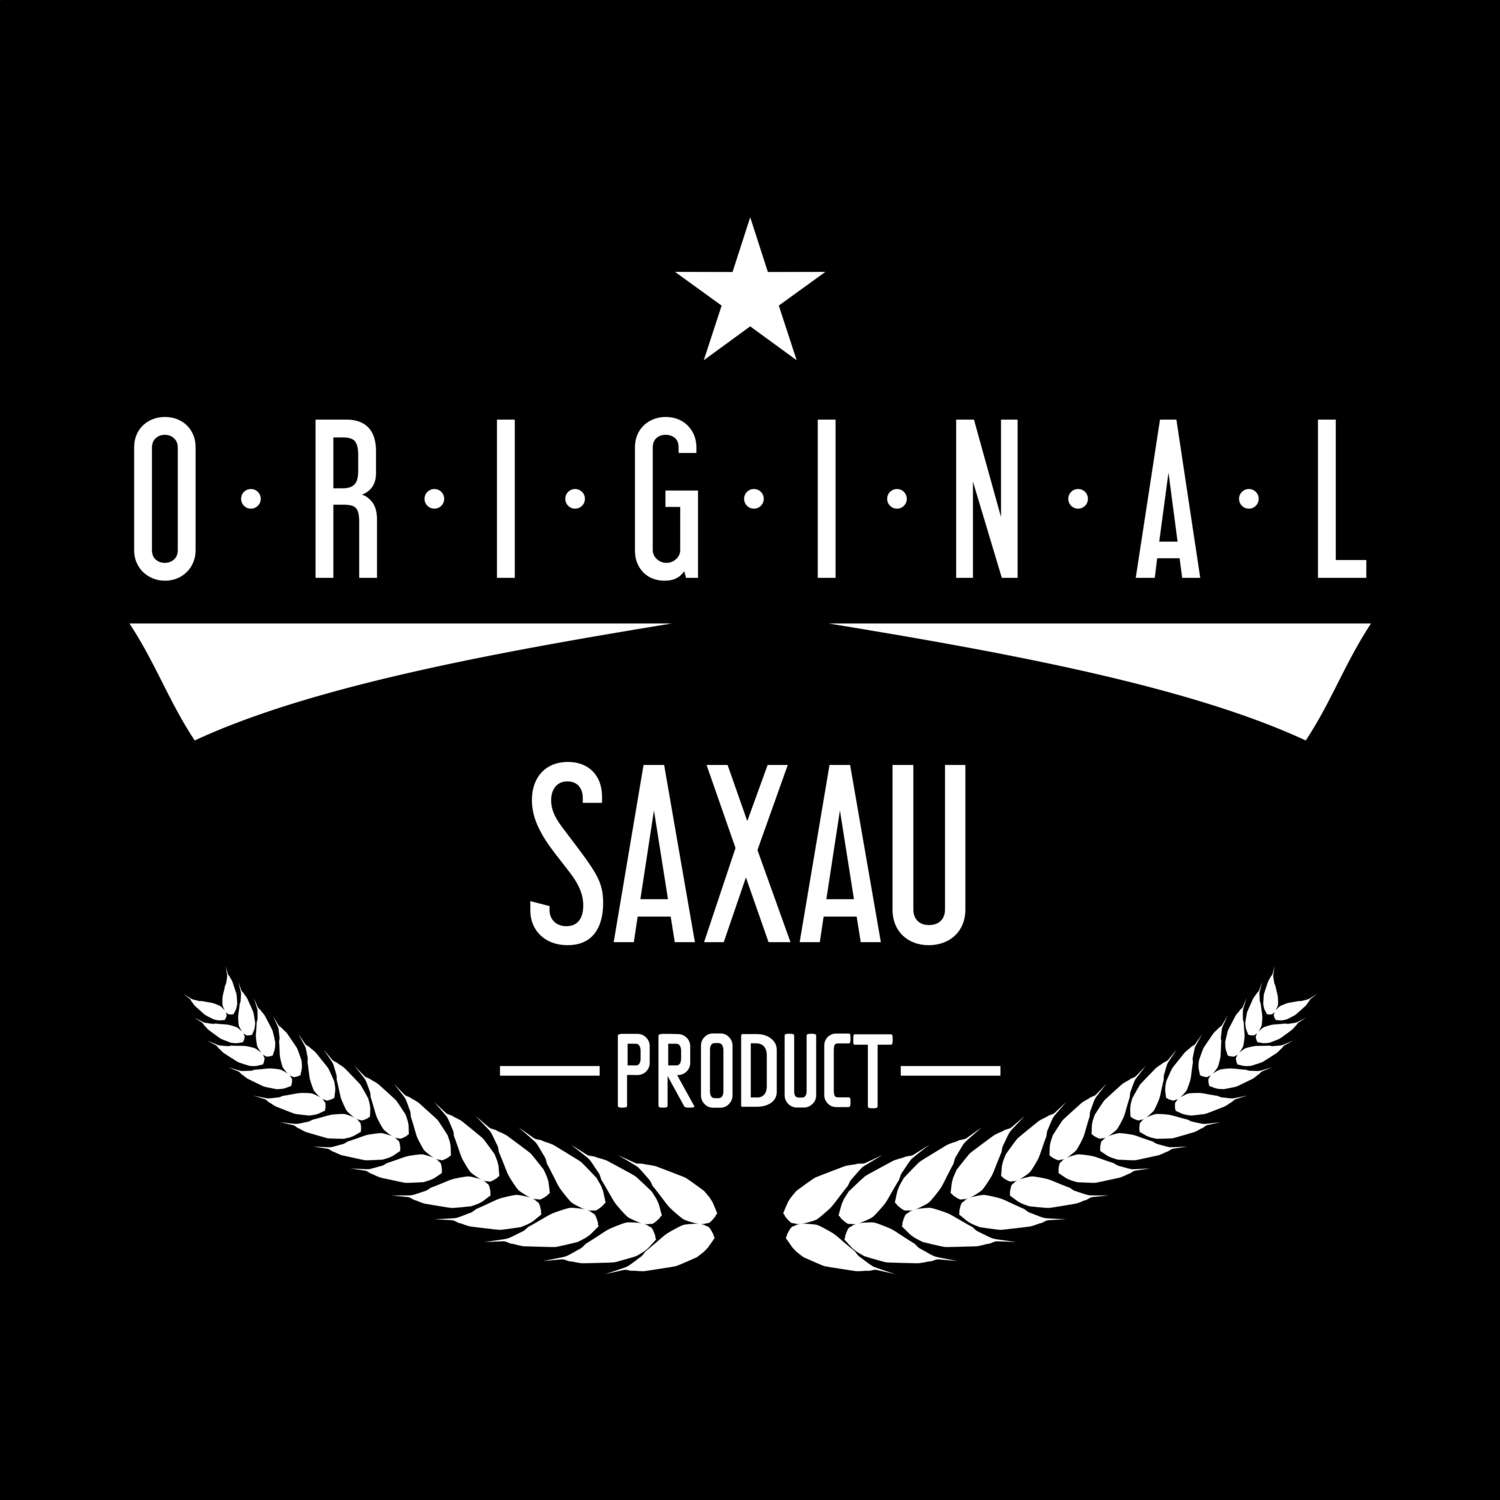 Saxau T-Shirt »Original Product«